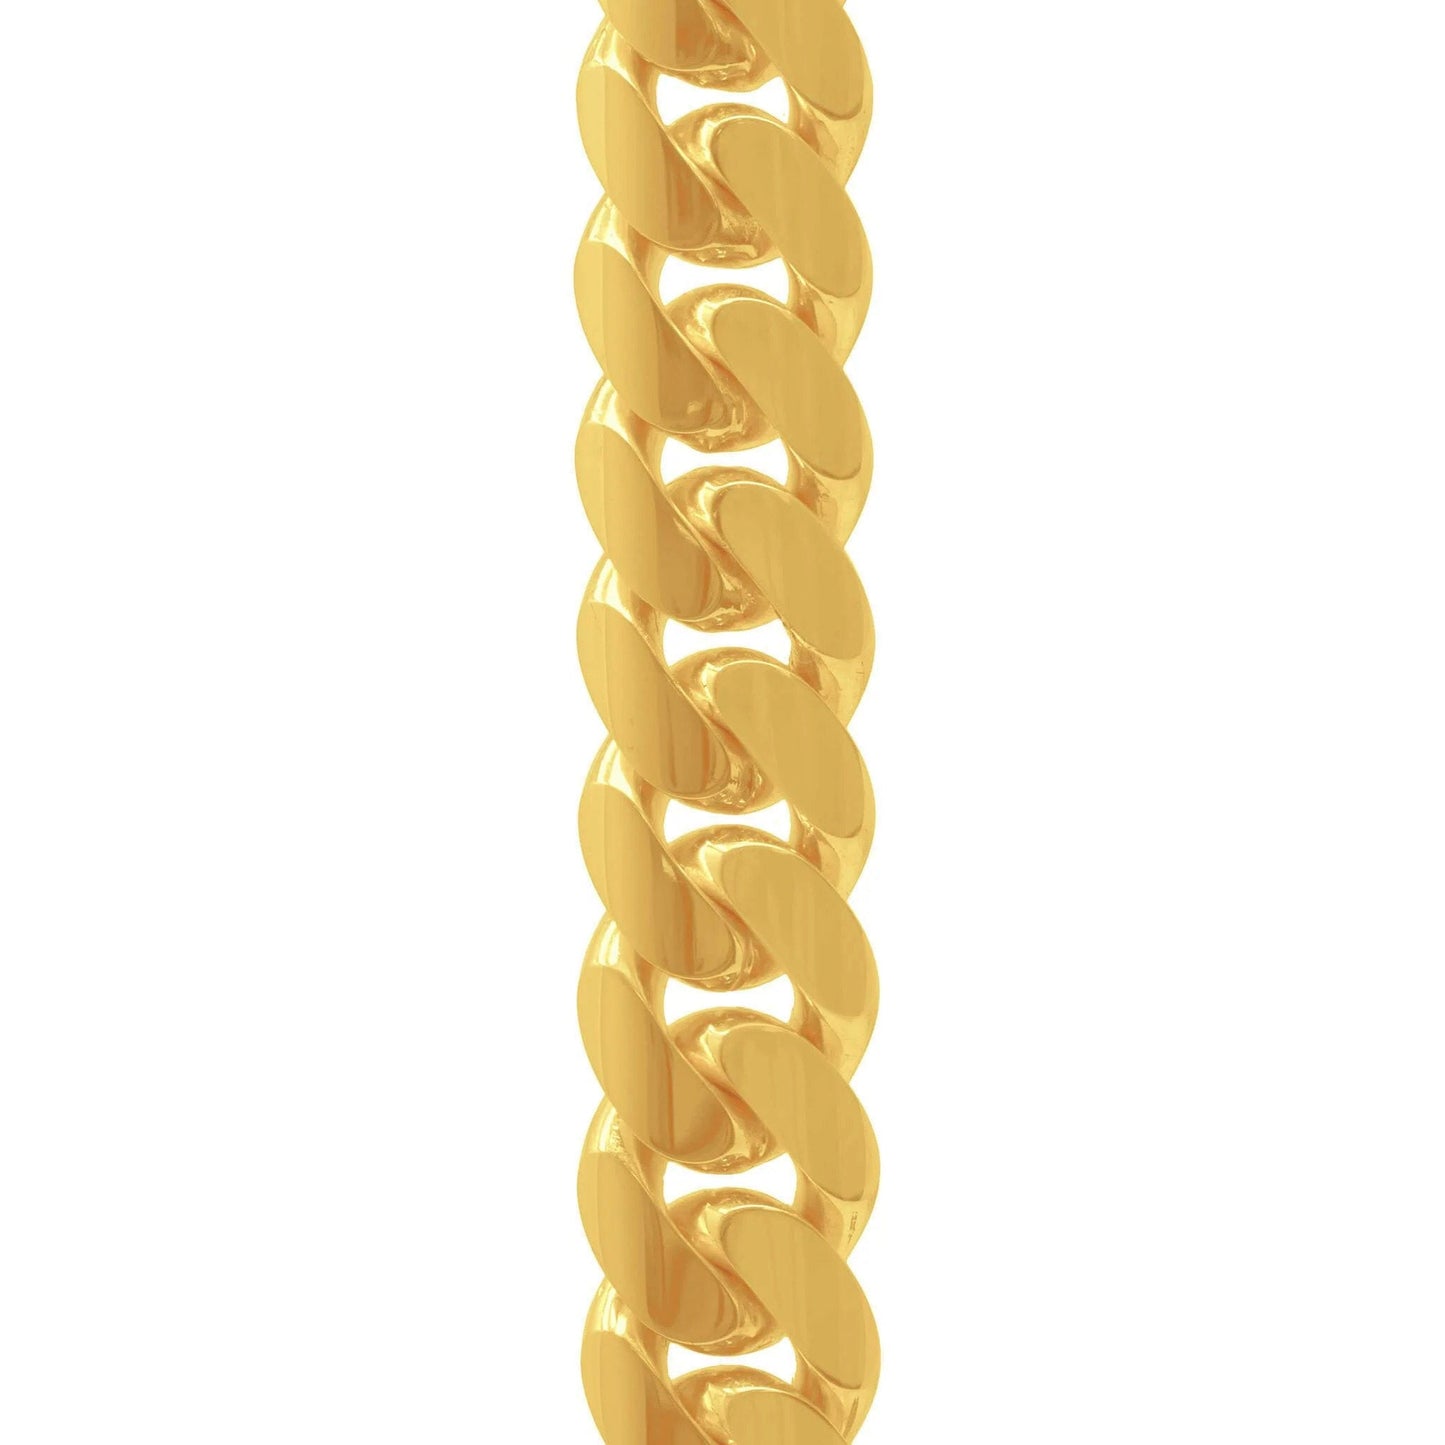 10mm Miami Cuban Link Chain in 10K Solid Yellow Gold - Vera Jewelry in Miami